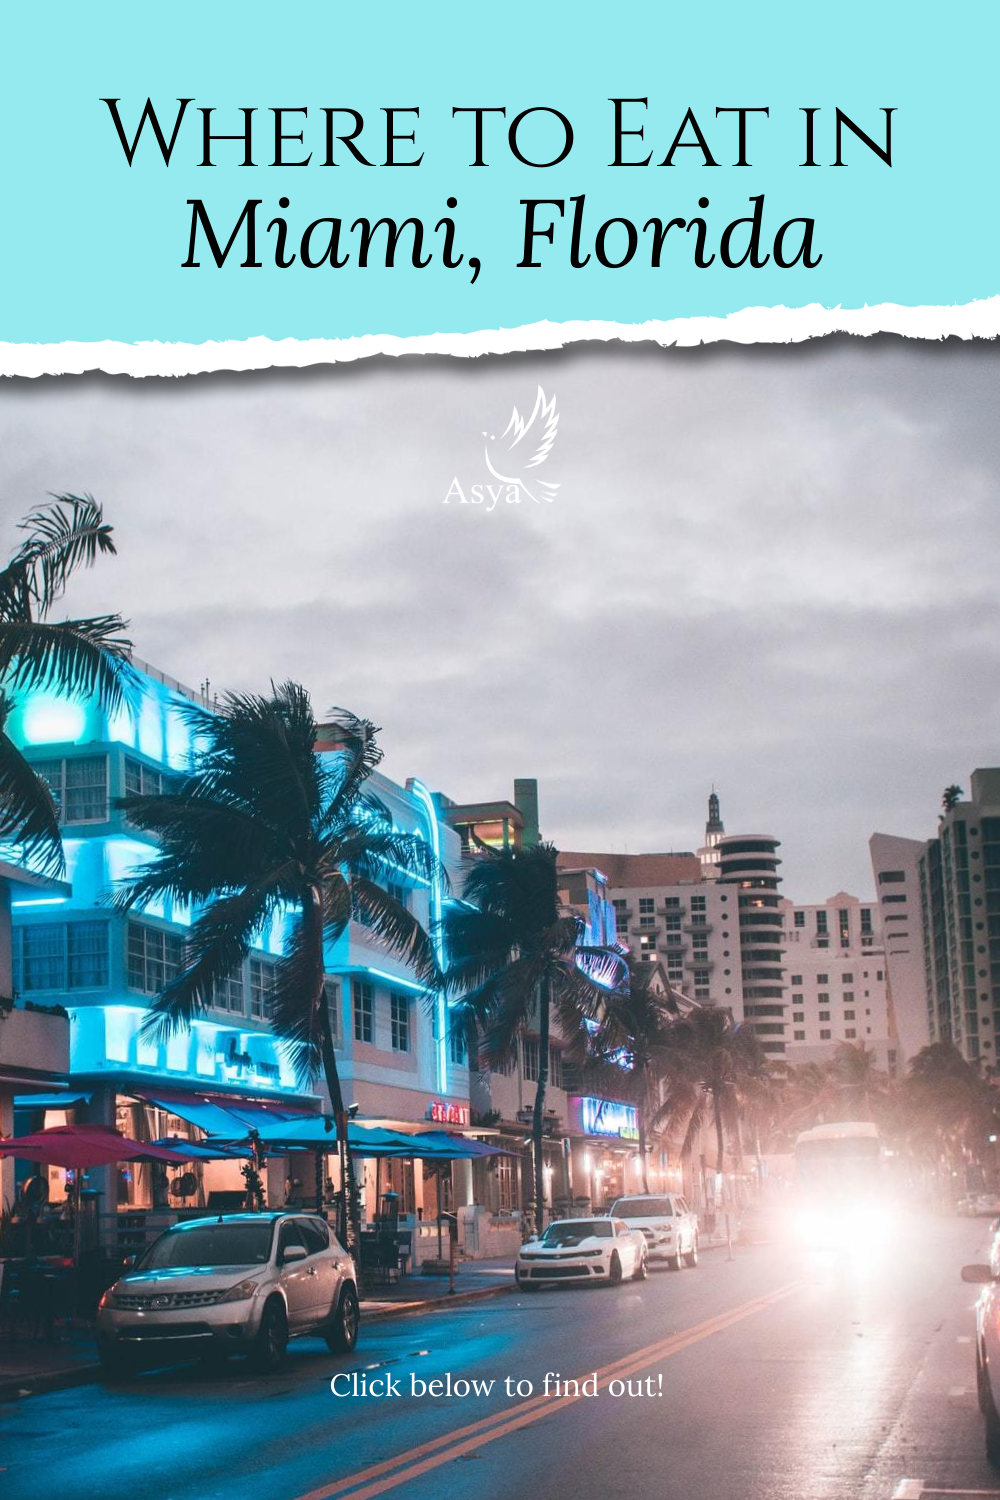 Where to eat in Miami Florida.jpg